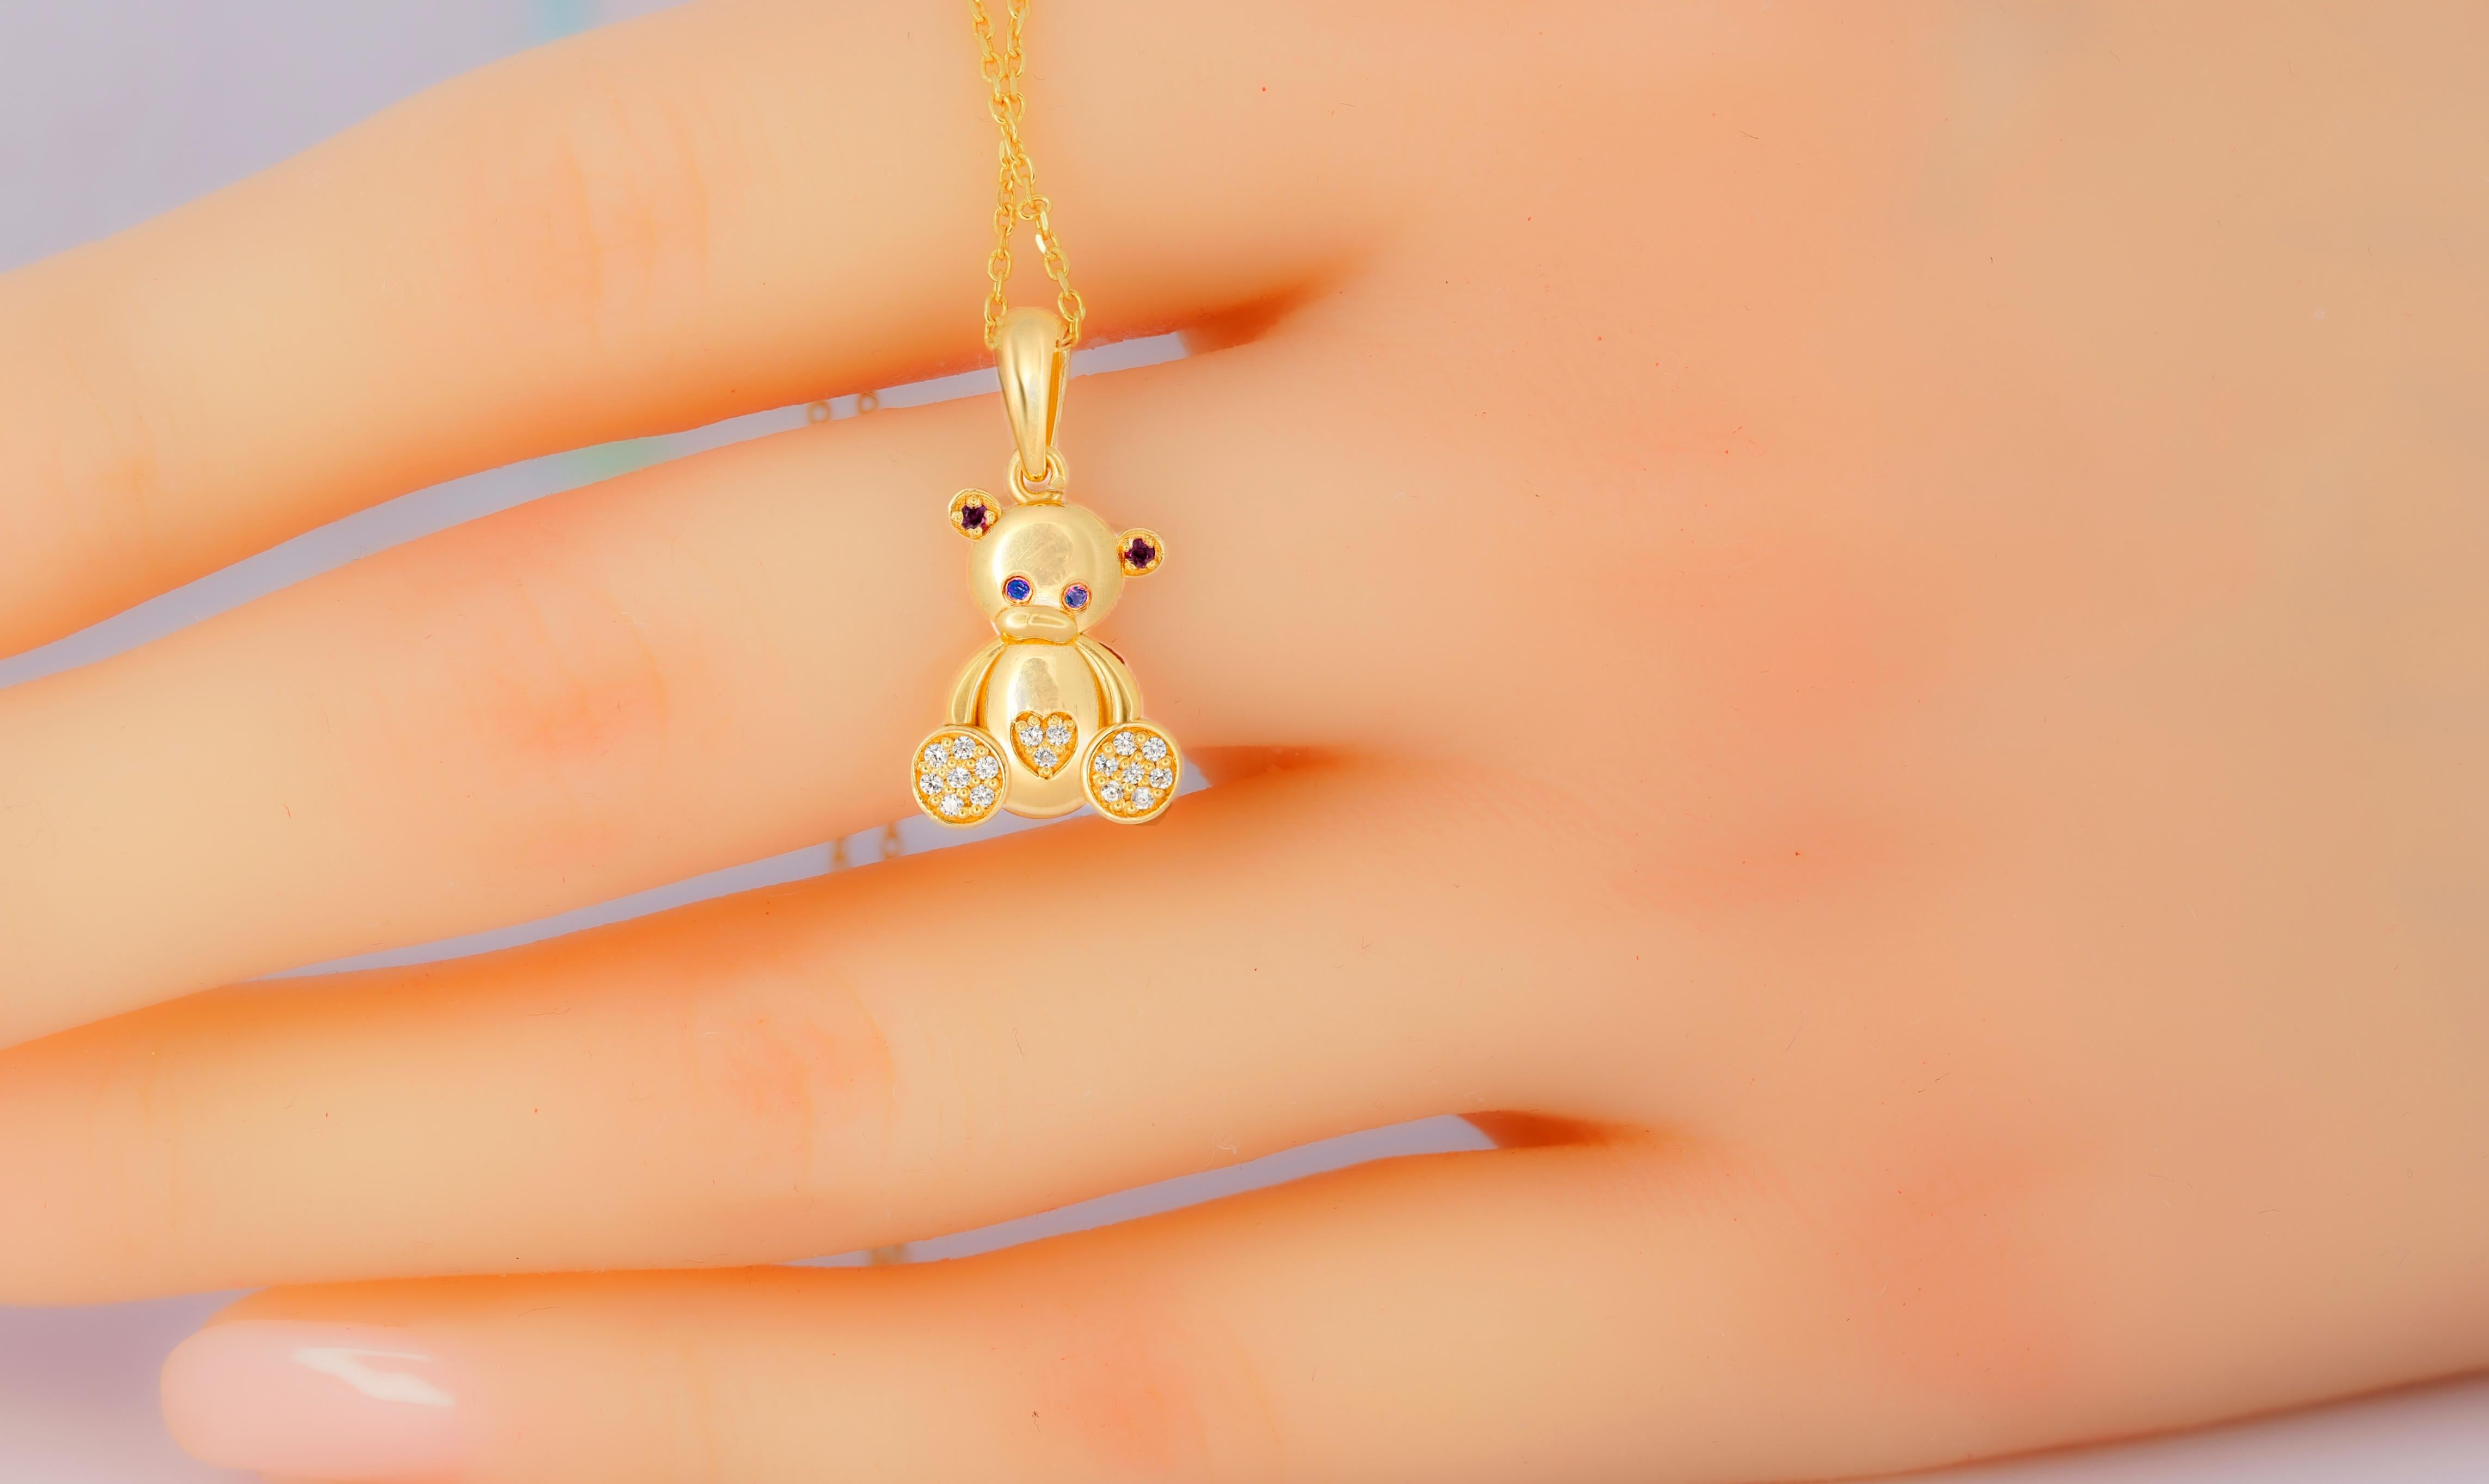 Modern Teddy bear pendant in 14k gold. For Sale